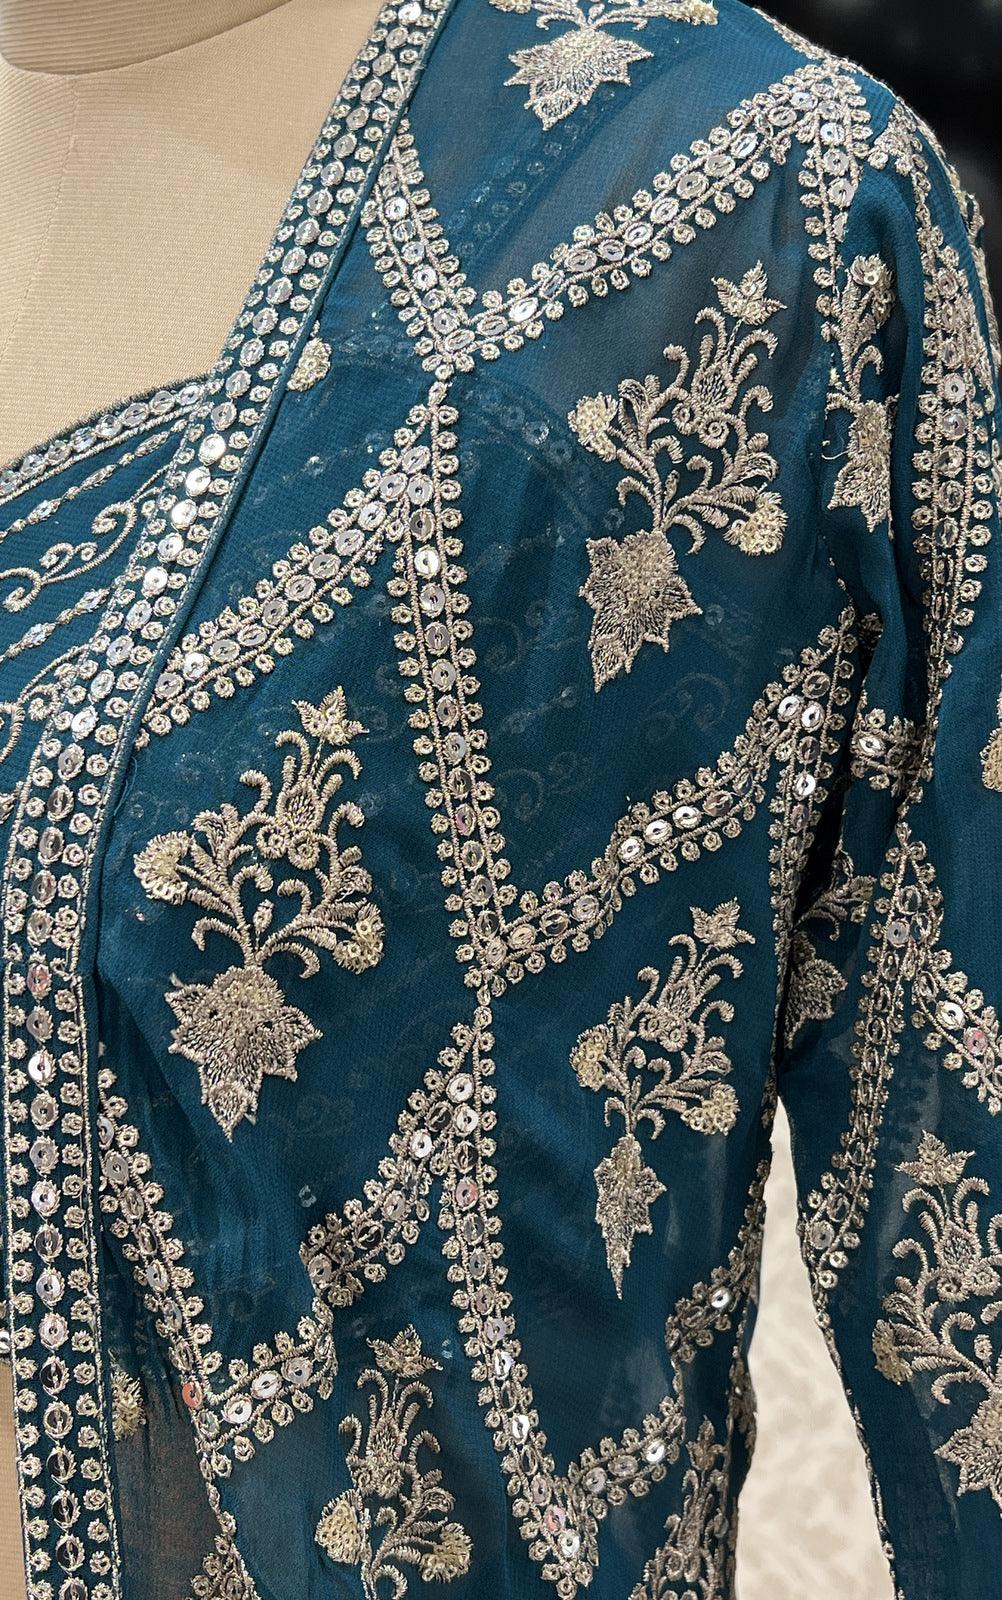 Rama Green Zari and Sequins work Long Overcoat Styled Crop Top Lehenga - Seasons Chennai